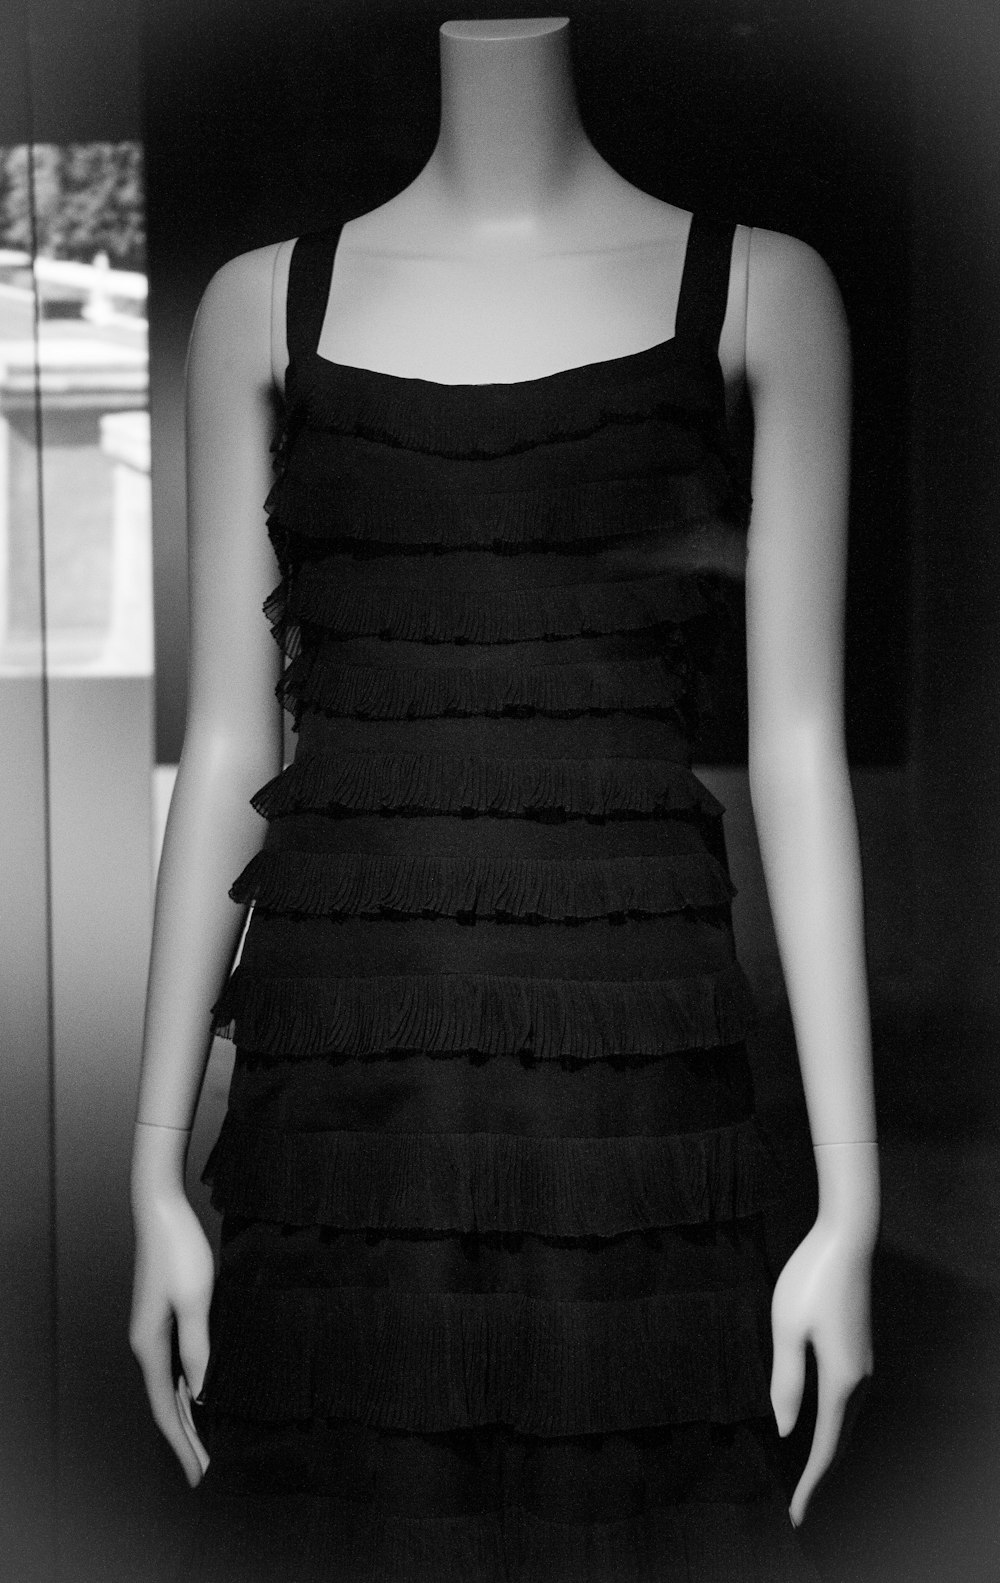 Woman in black spaghetti strap dress photo – Free Paris Image on Unsplash